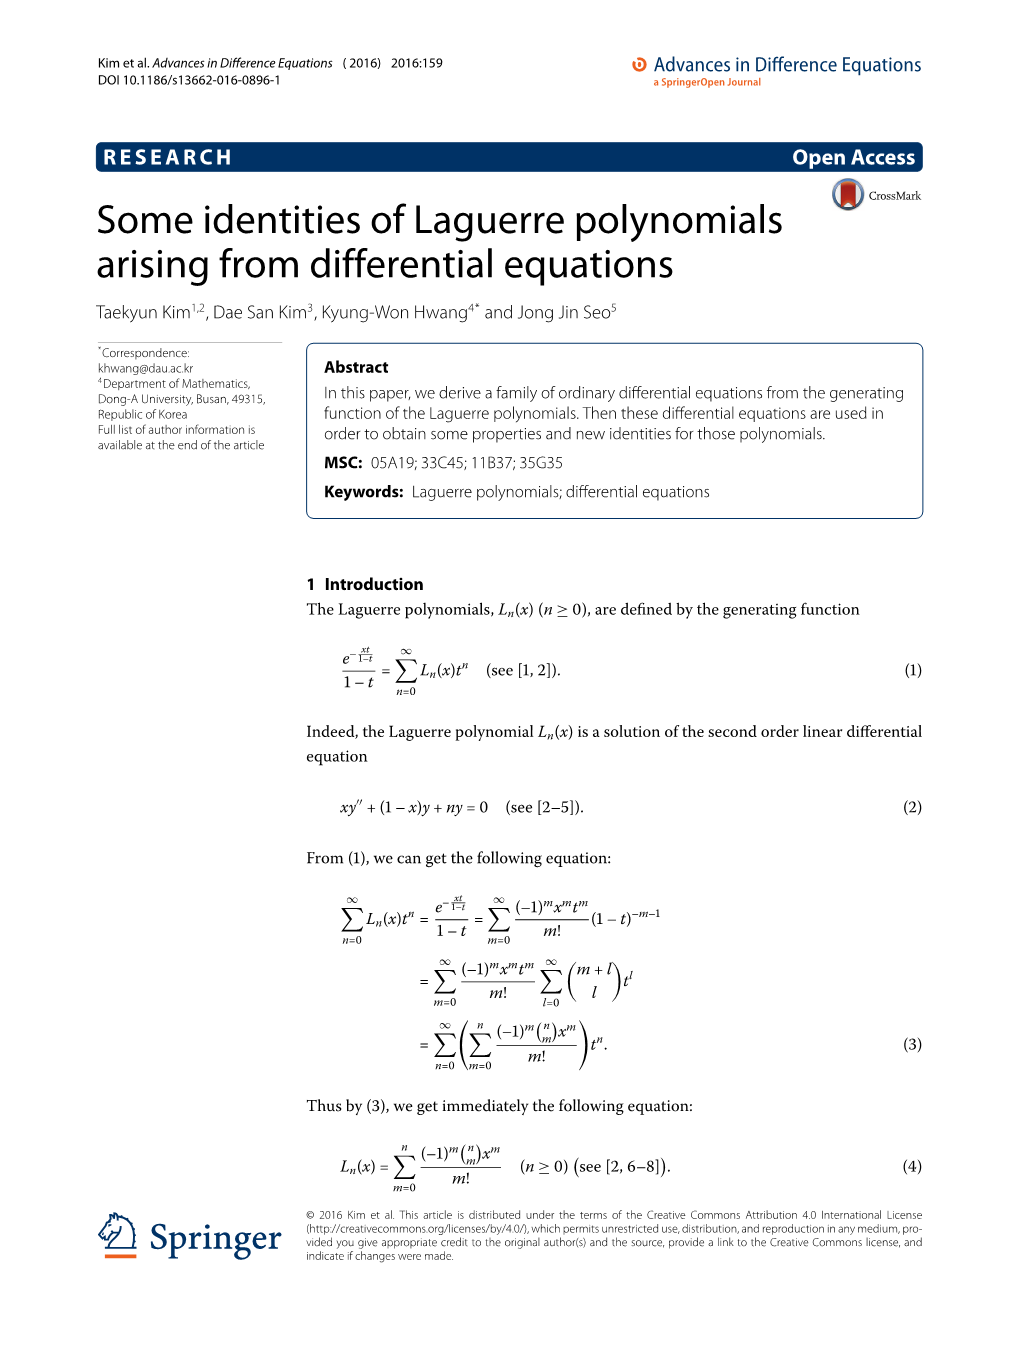 Some Identities of Laguerre Polynomials Arising from Differential Equations Taekyun Kim1,2,Daesankim3, Kyung-Won Hwang4* Andjongjinseo5